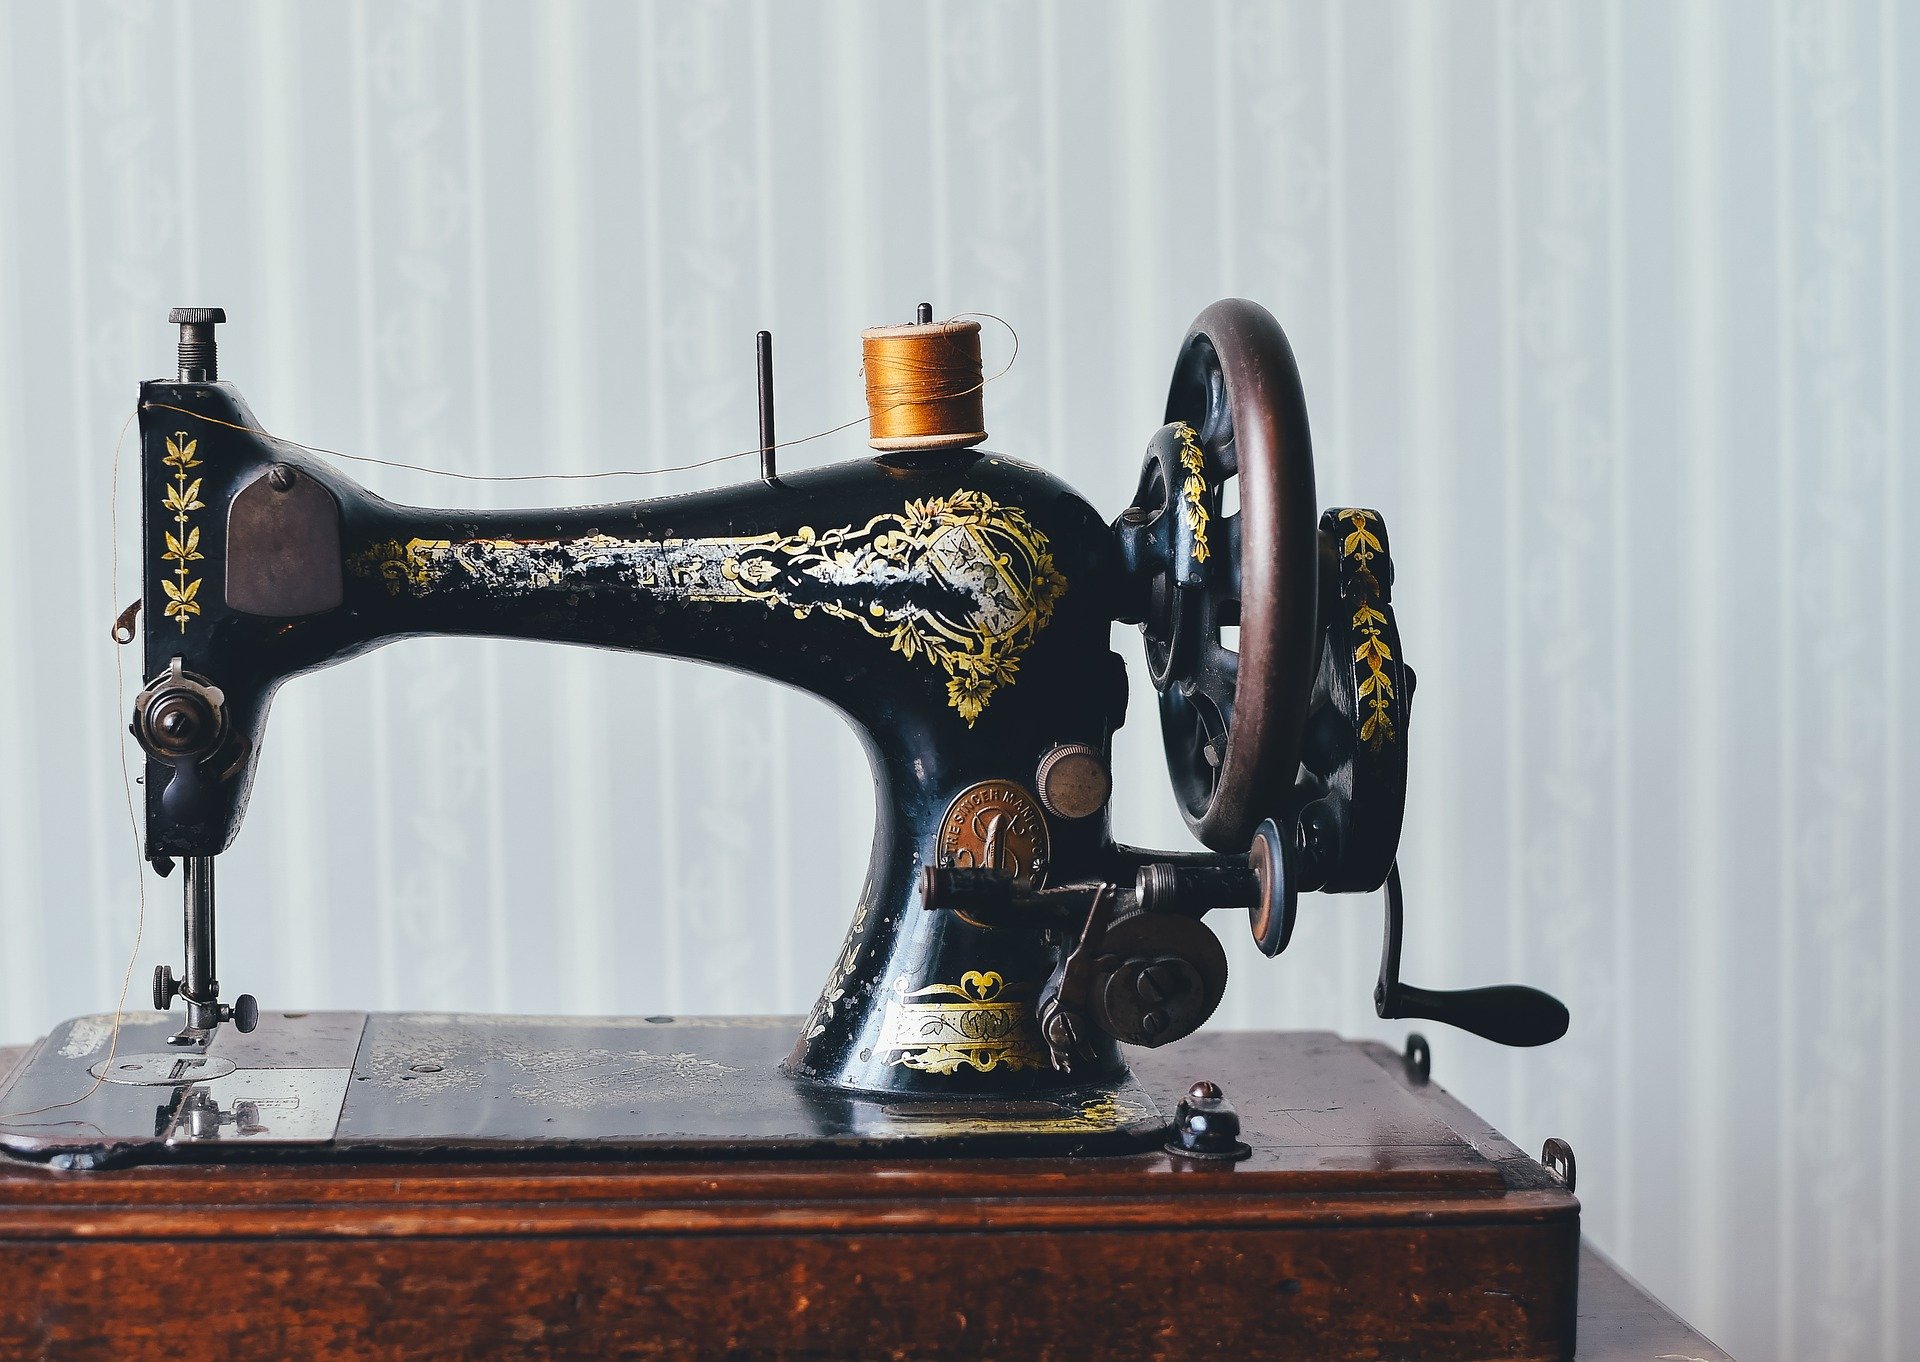 Imagen 3. Máquina de coser Singer. Tomada de Pexels en Pixabay